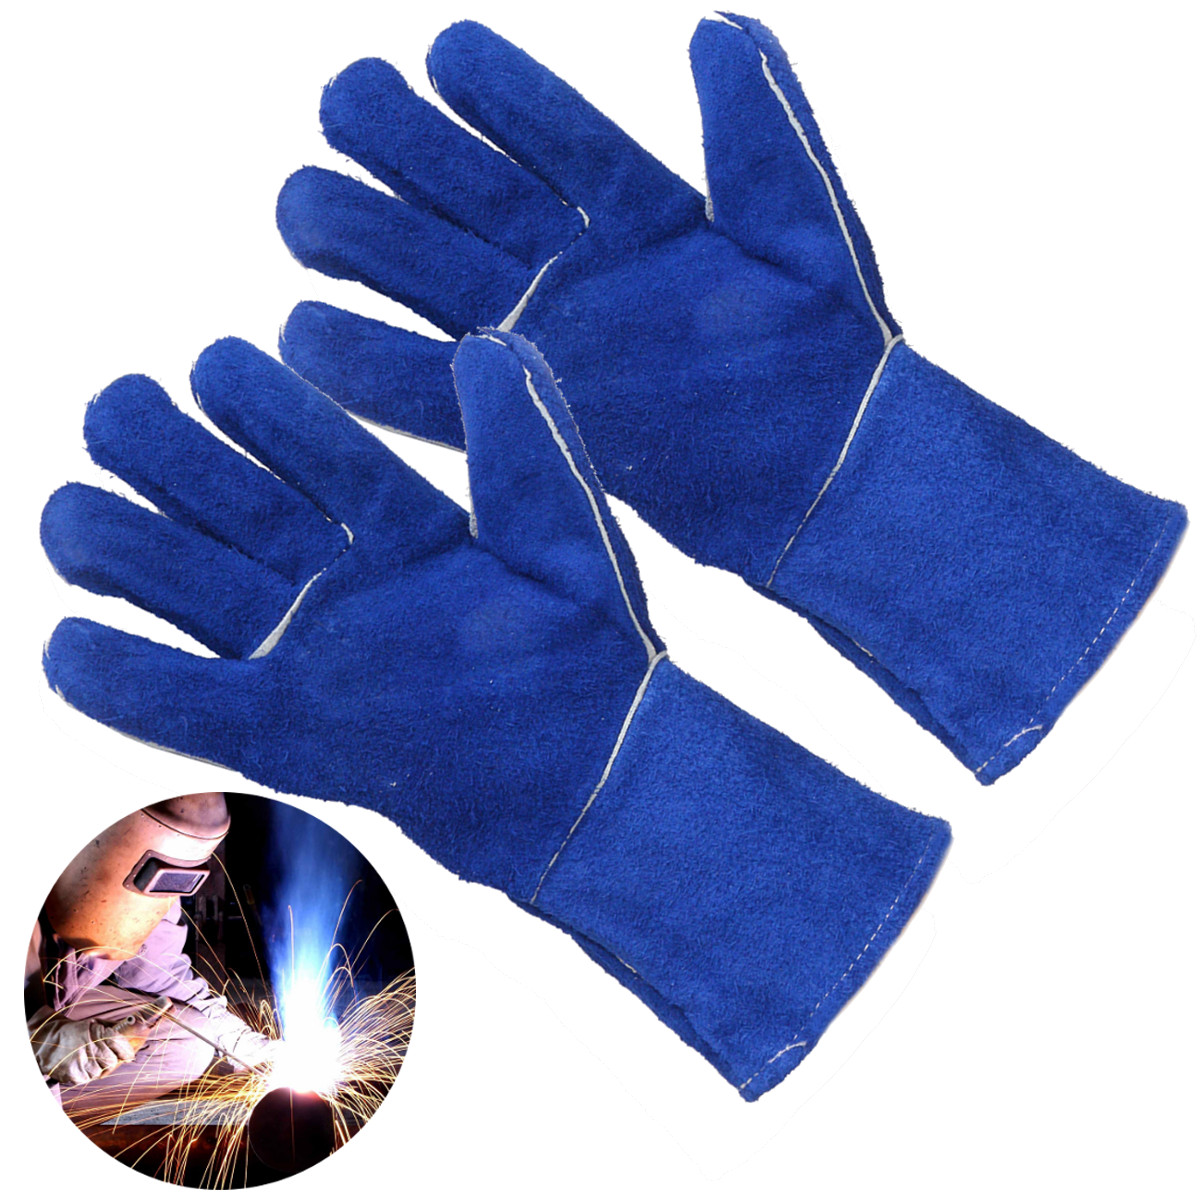 1-Pair-Wood-Burner-Welder-Gauntlets-Fire-High-Temp-Stoves-Protection-Long-Gloves-Blue-1161581